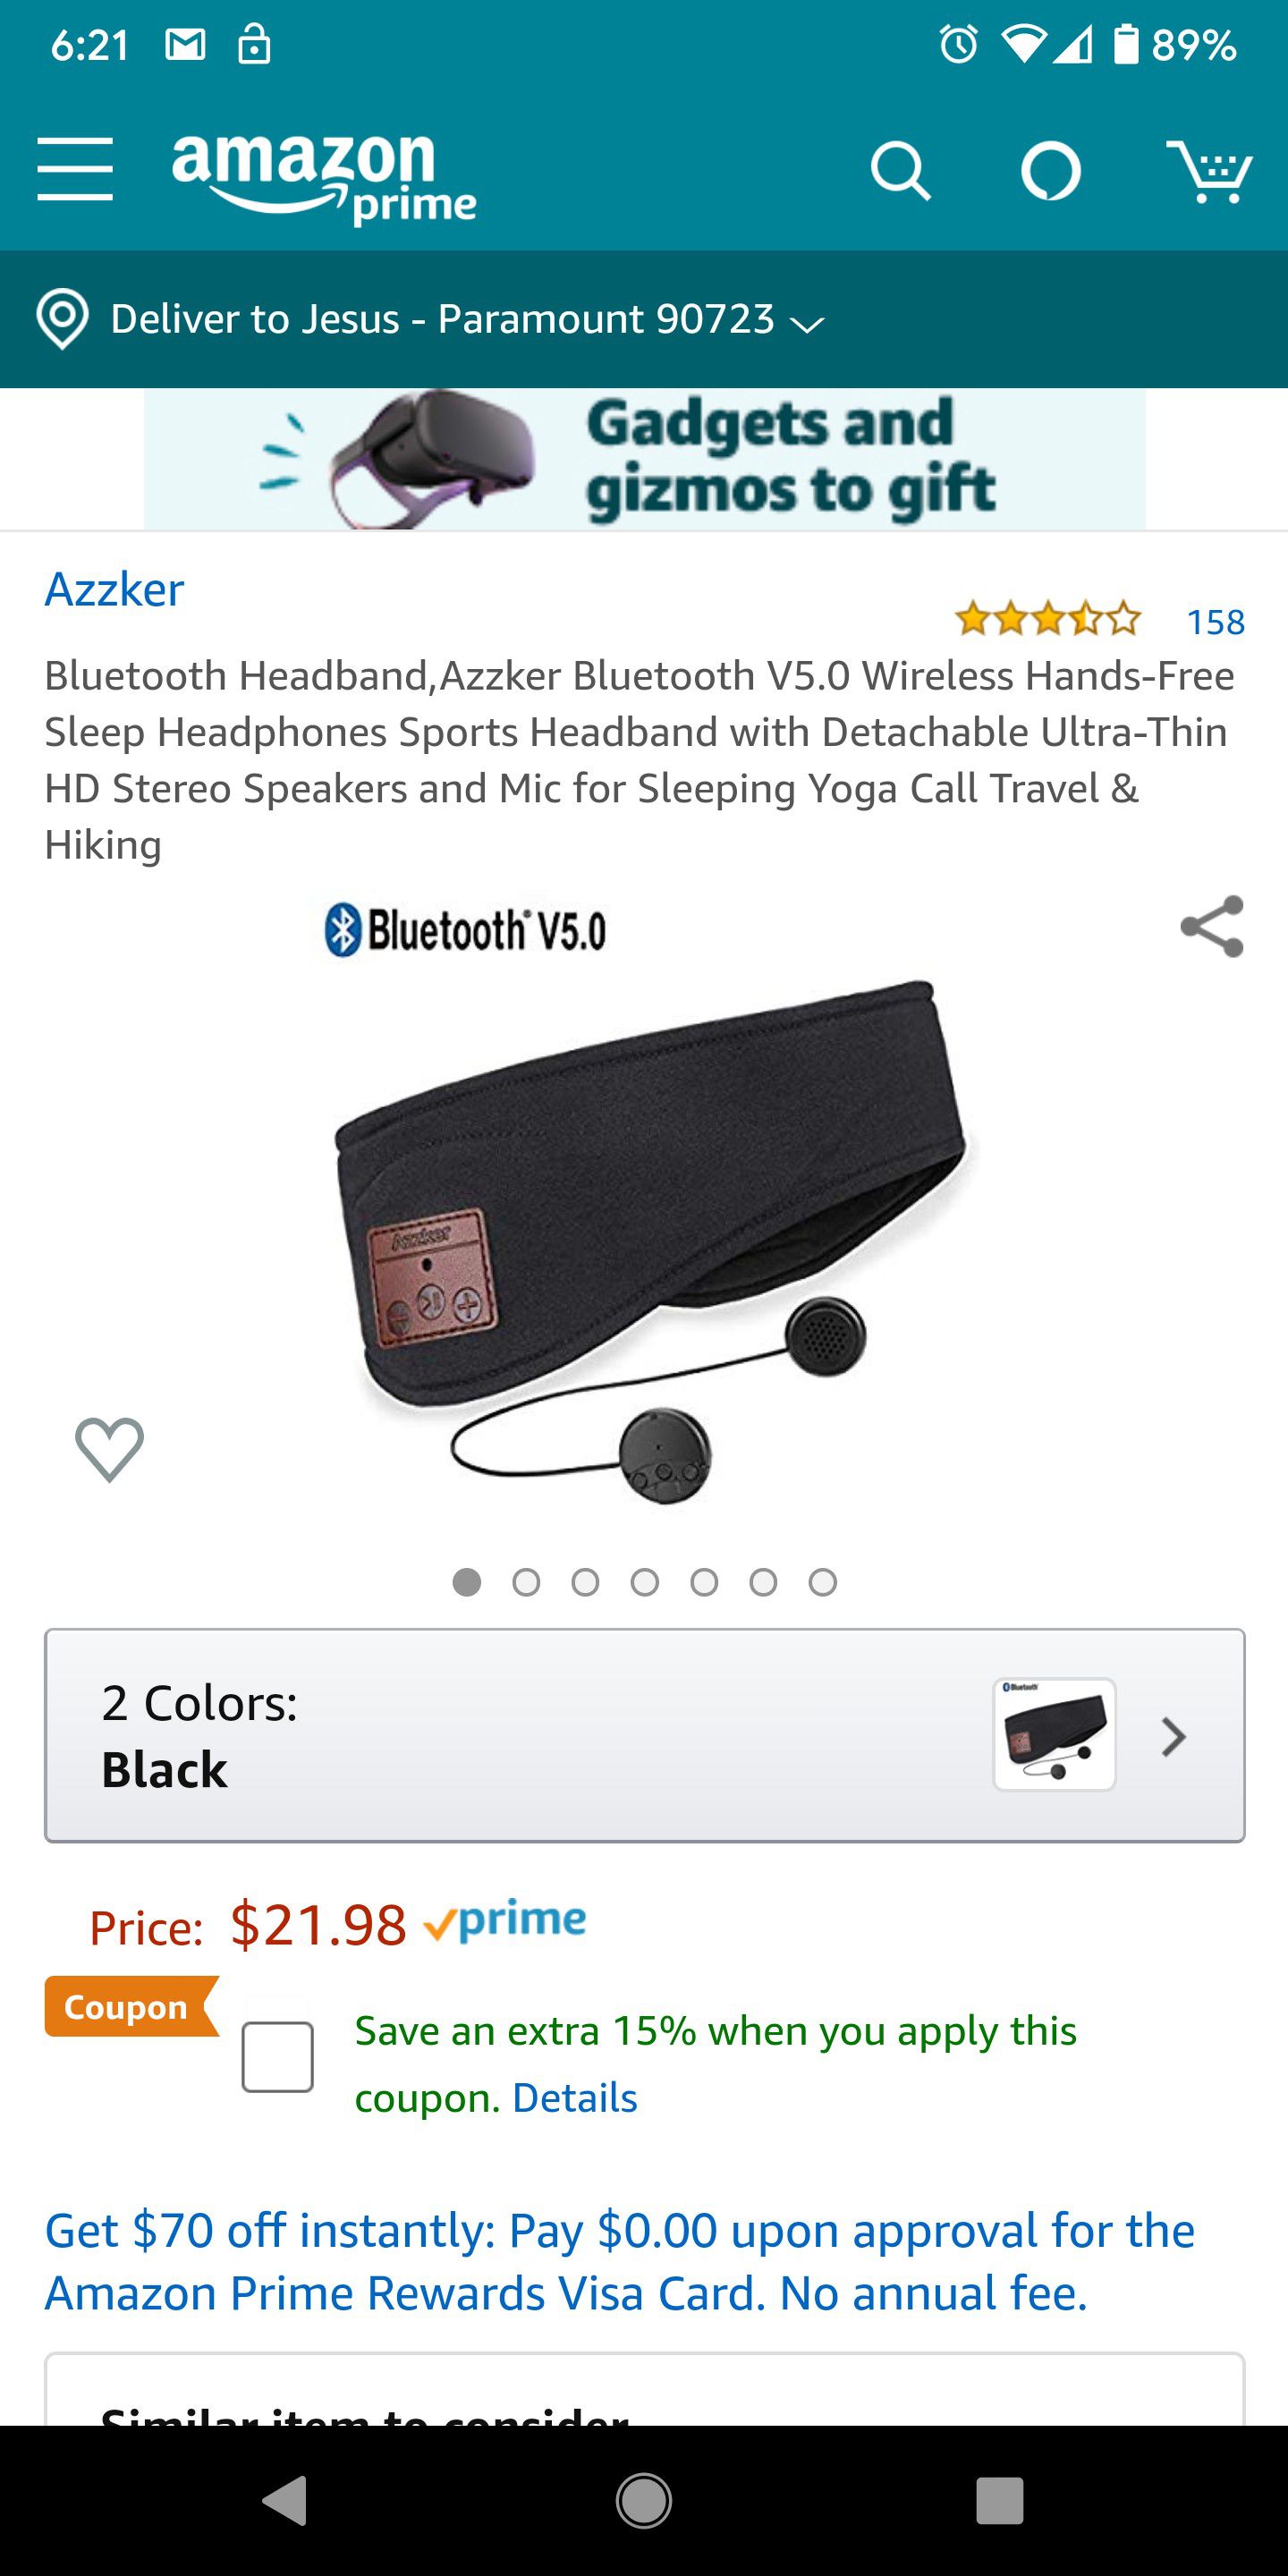 Azzker Bluetooth headband